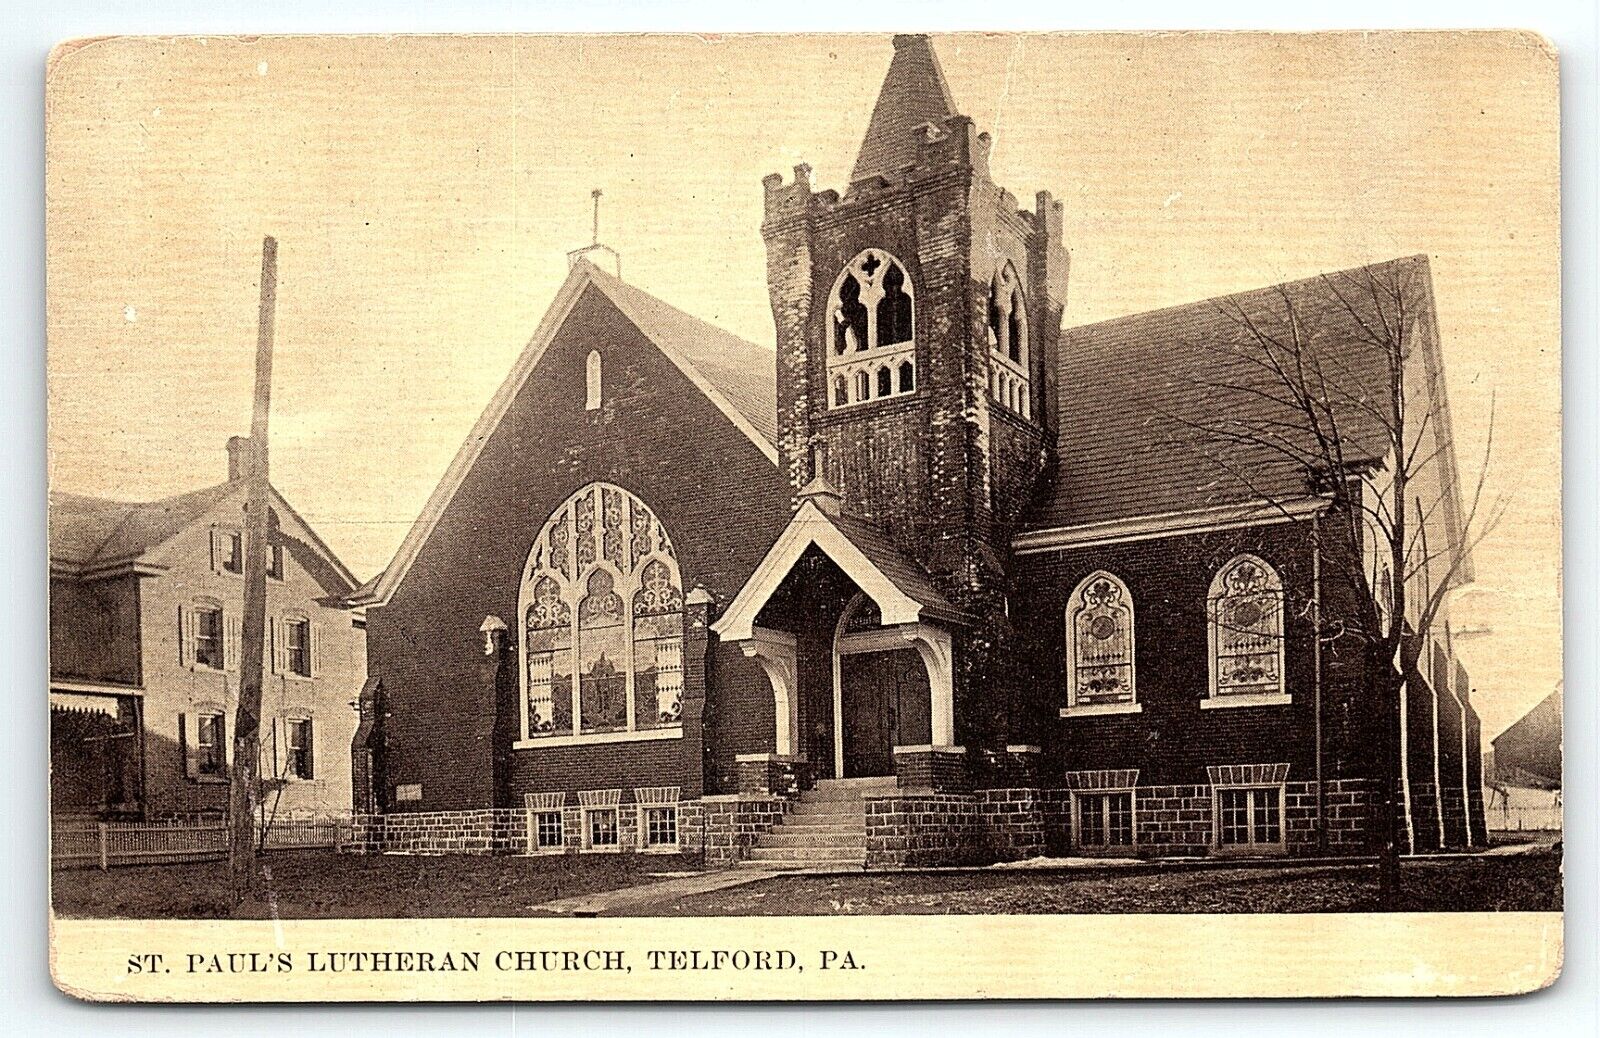 c1910 TELFORD PA ST. PAUL'S LUTHERAN CHURCH STREET VIEW EARLY POSTCARD P3984